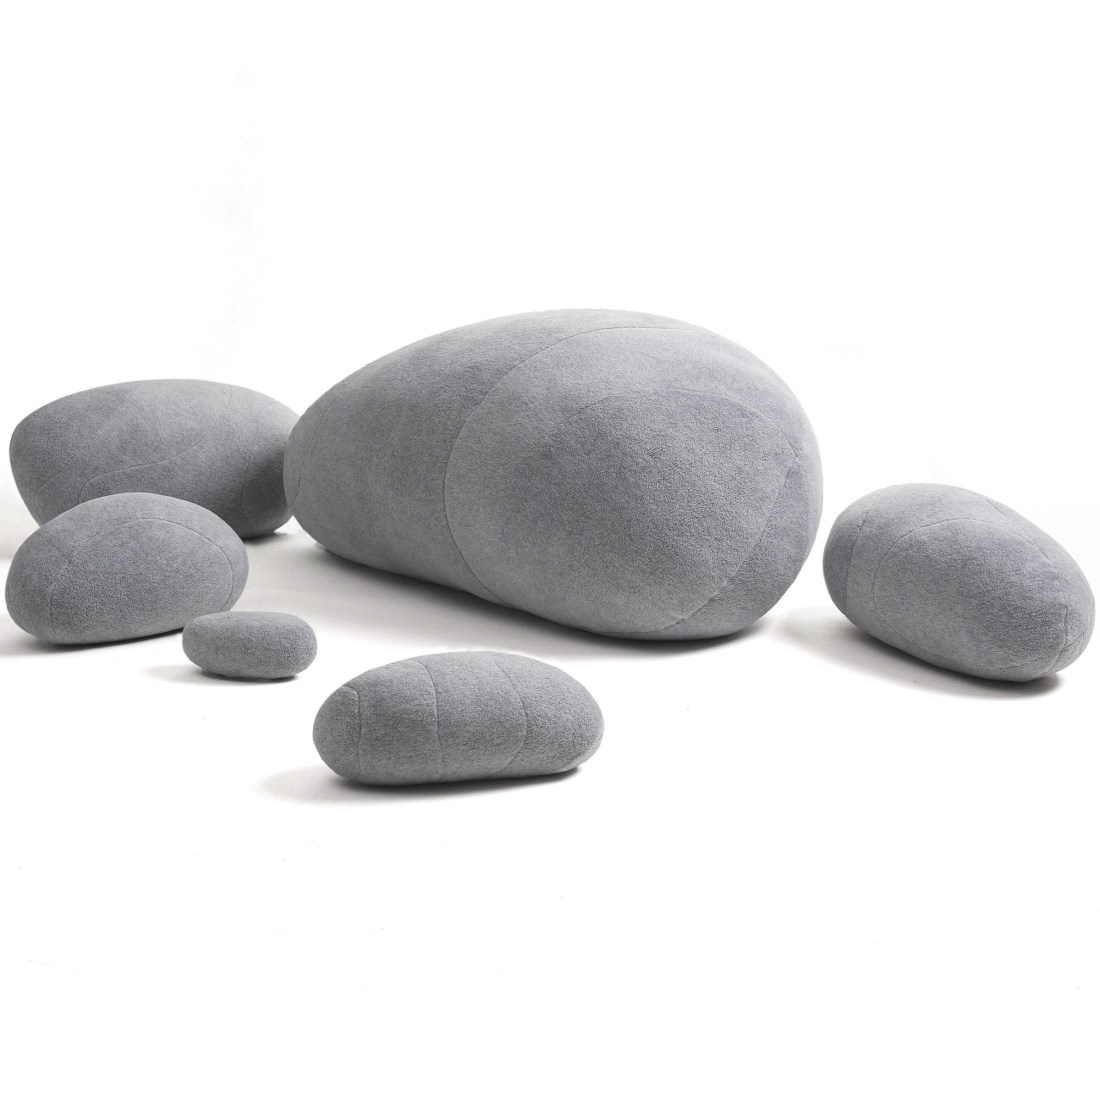 Decorative Throw Pebble Pillows That Look Like Pebble Rock Living Stone  Pillows 